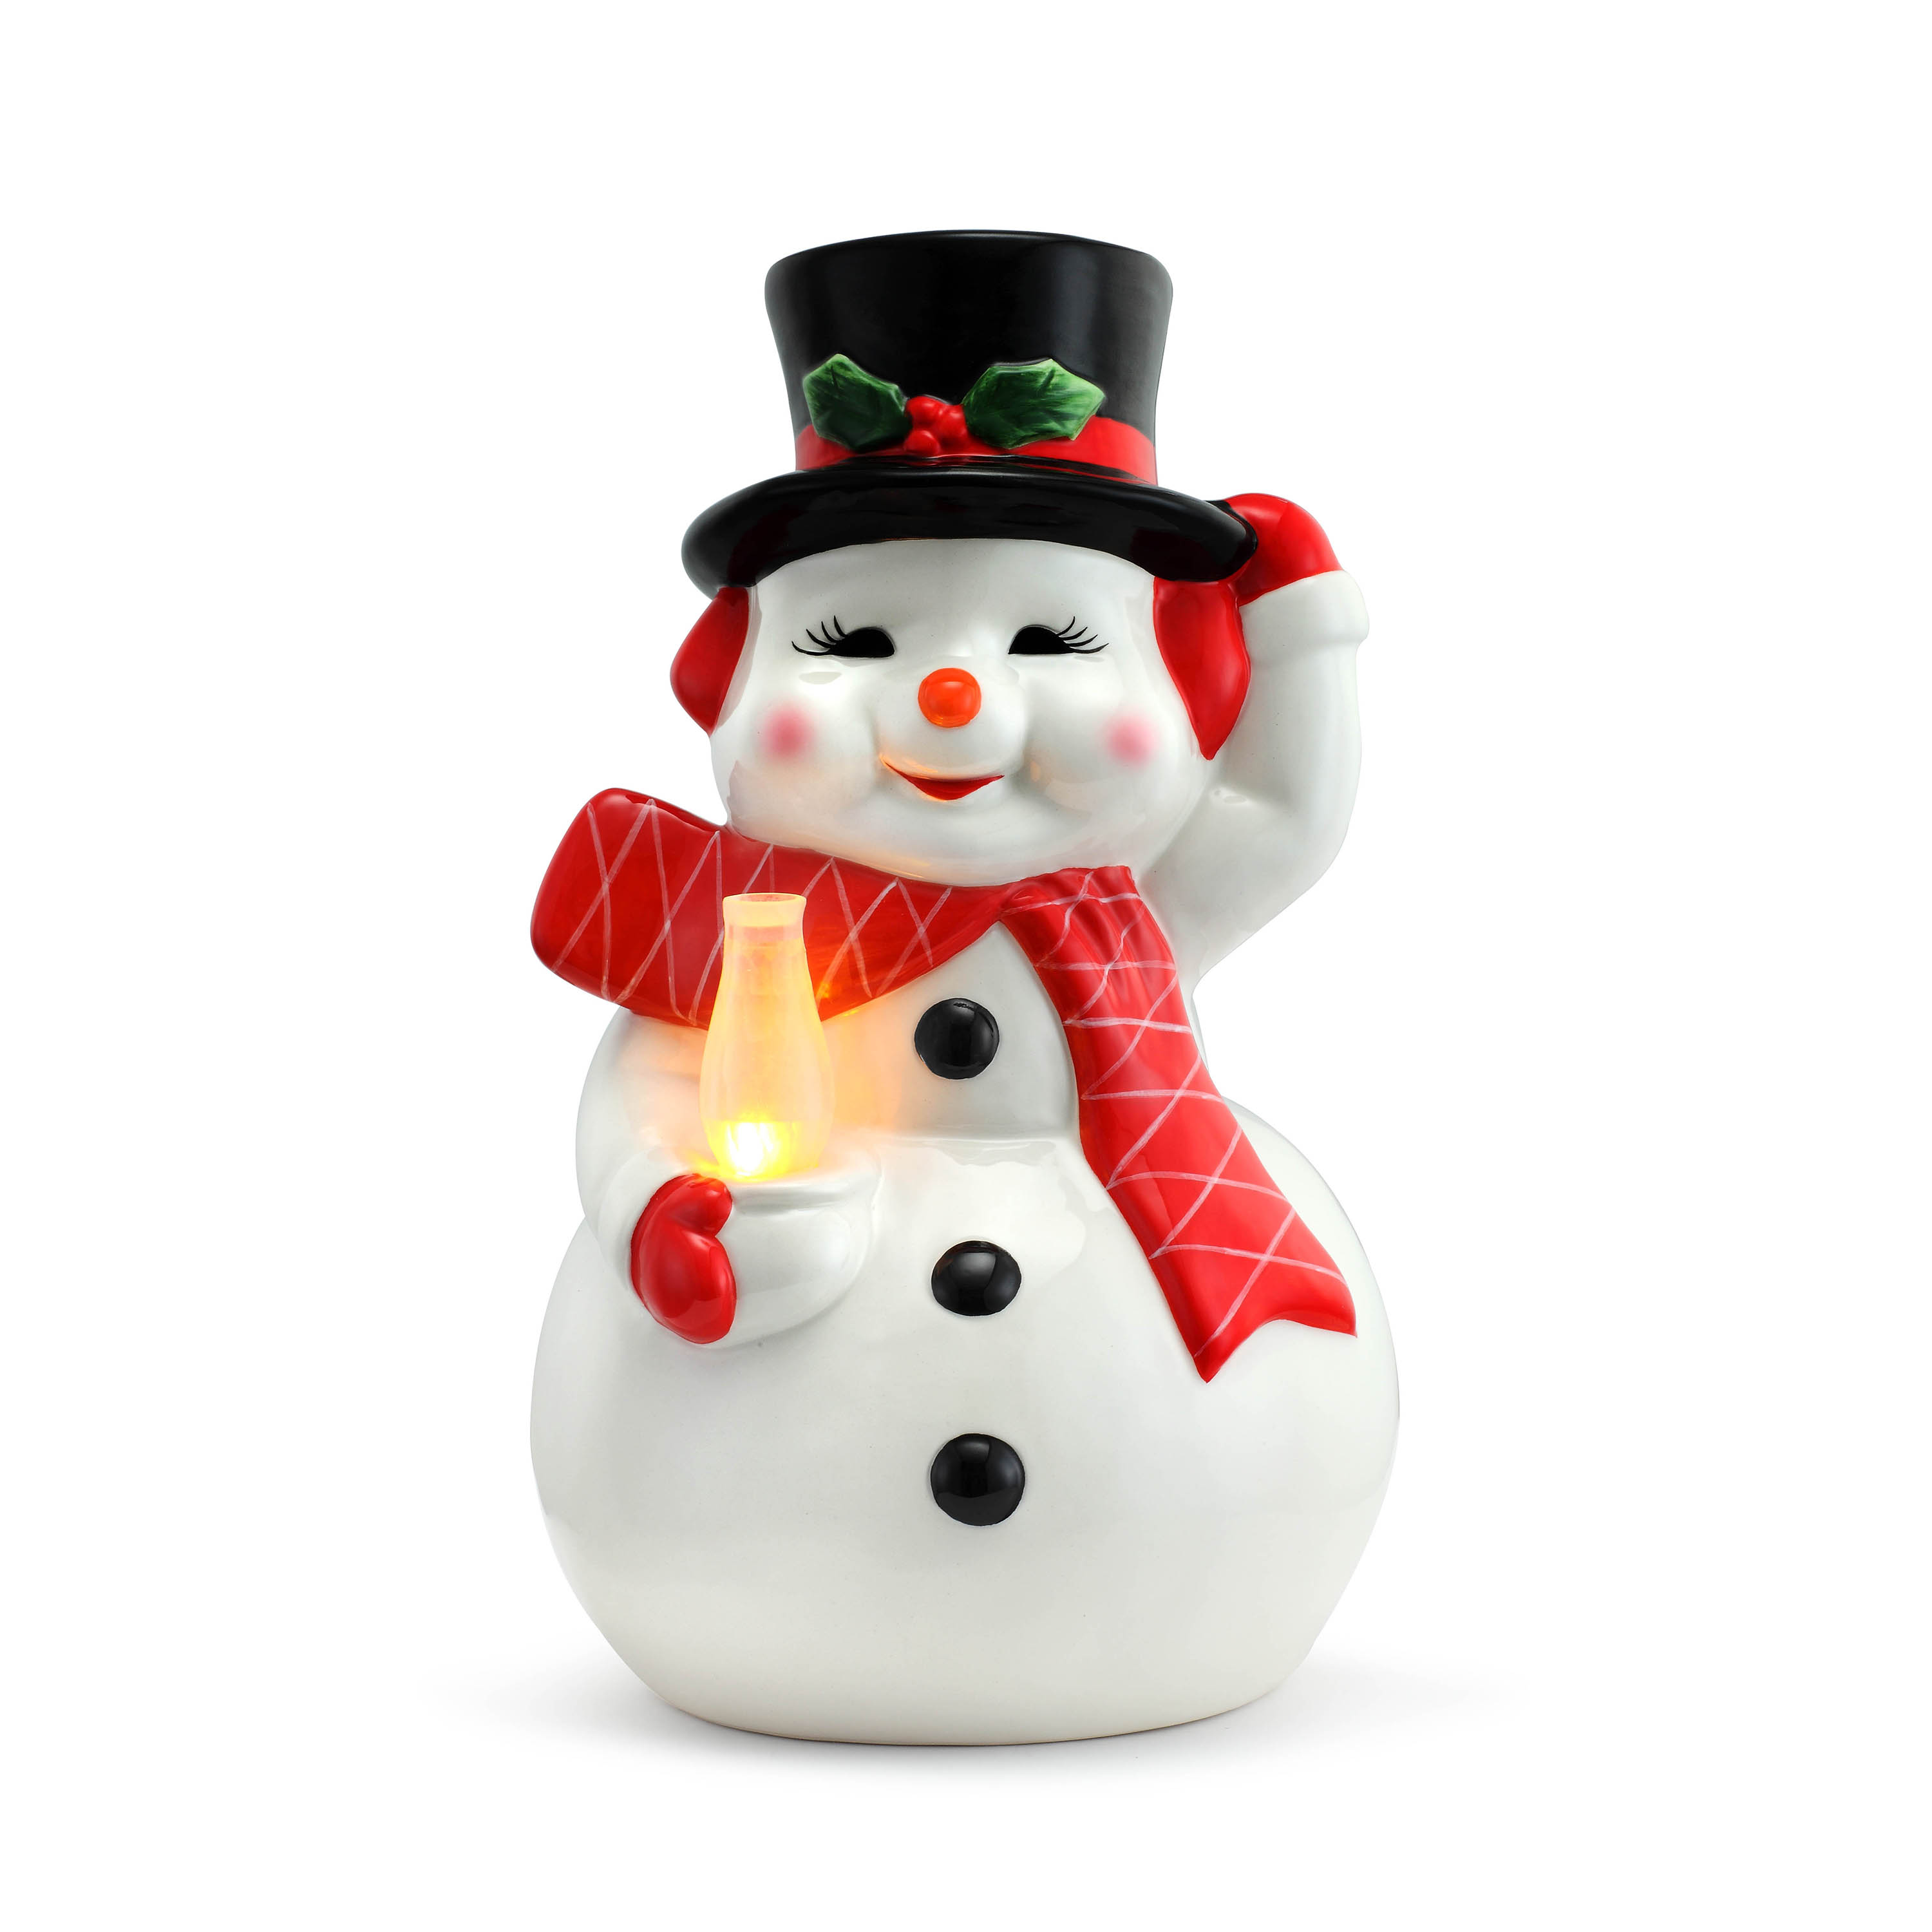 Christmas Decoration White Ceramic Light Up LED Snowman Ornament Figurine NEW 